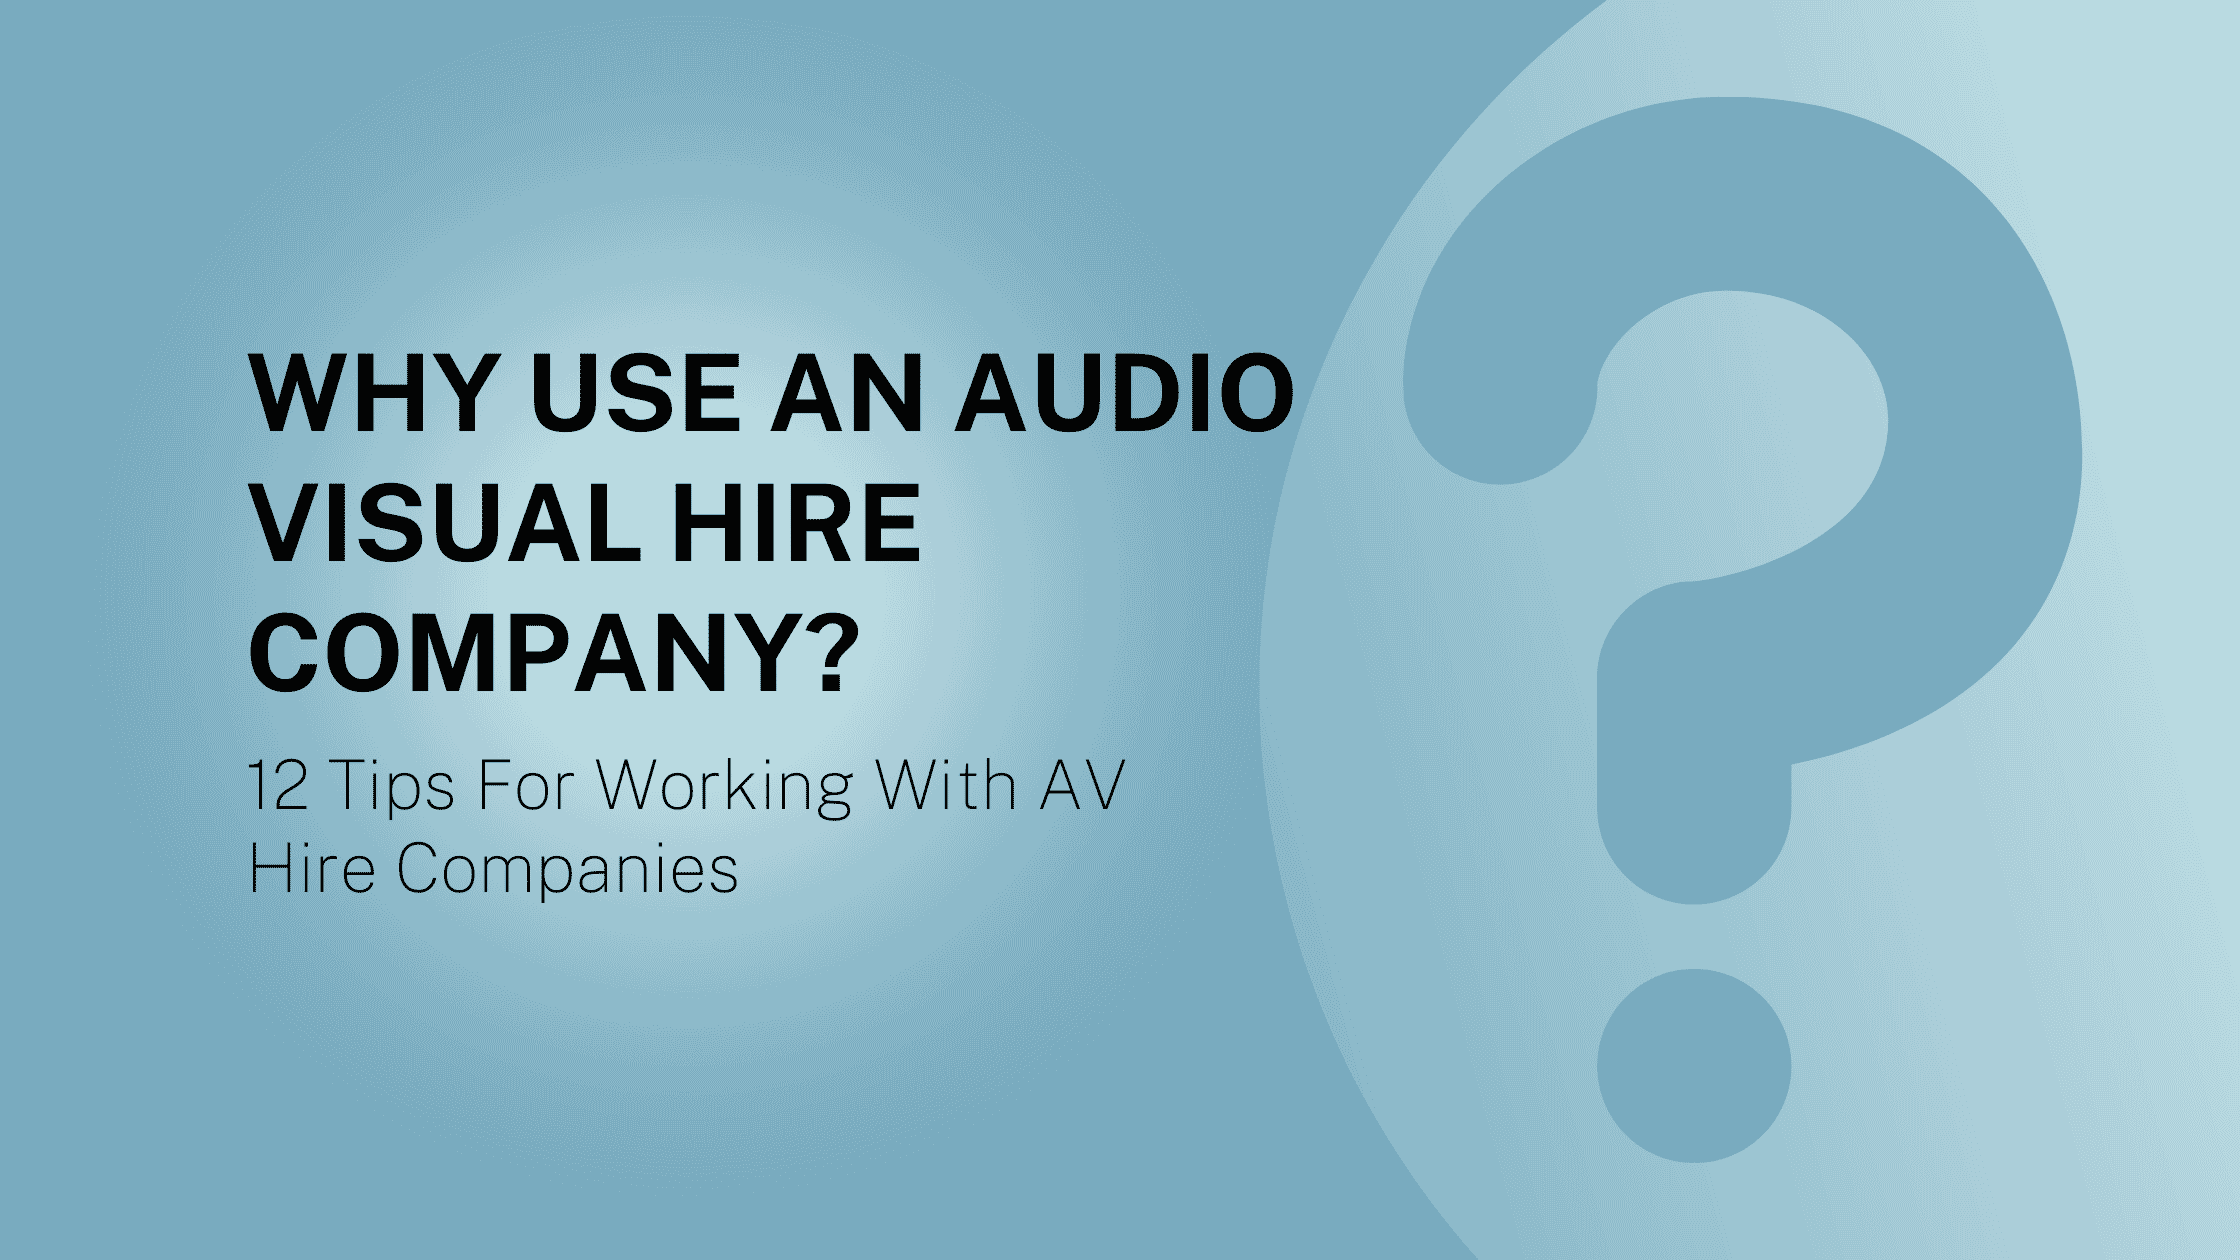 Why Use an Audio Visual Hire Company?